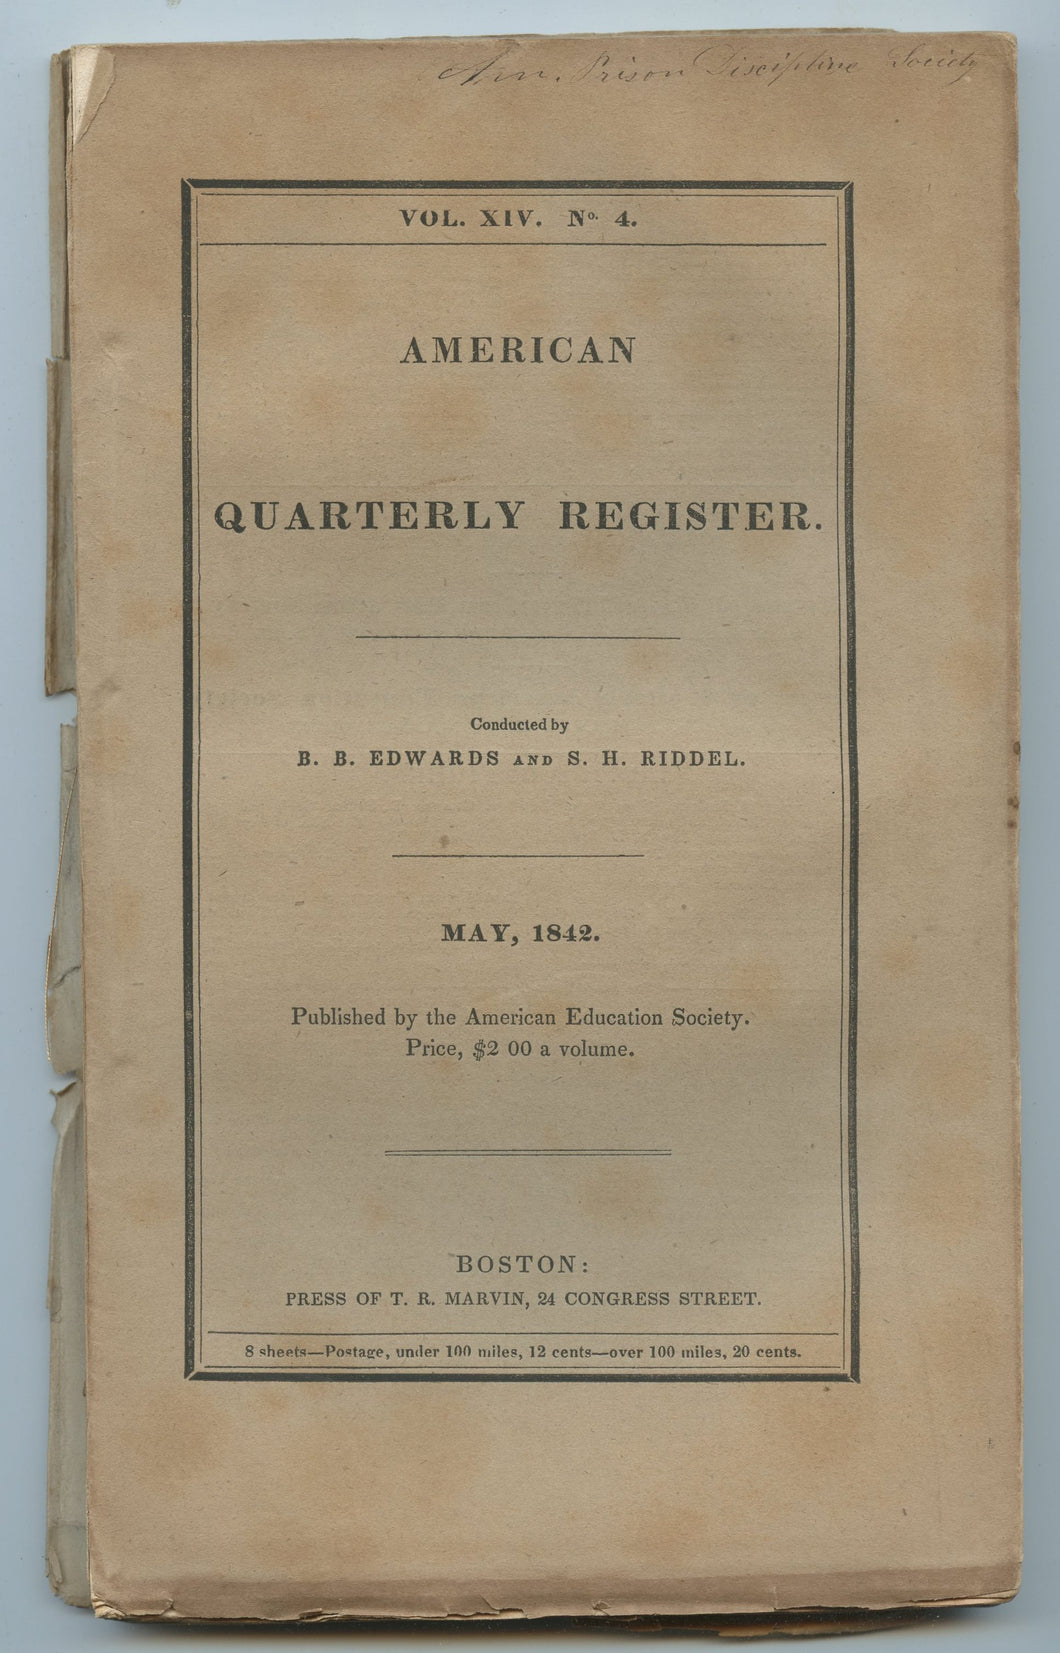 American Quarterly Register, May 1842